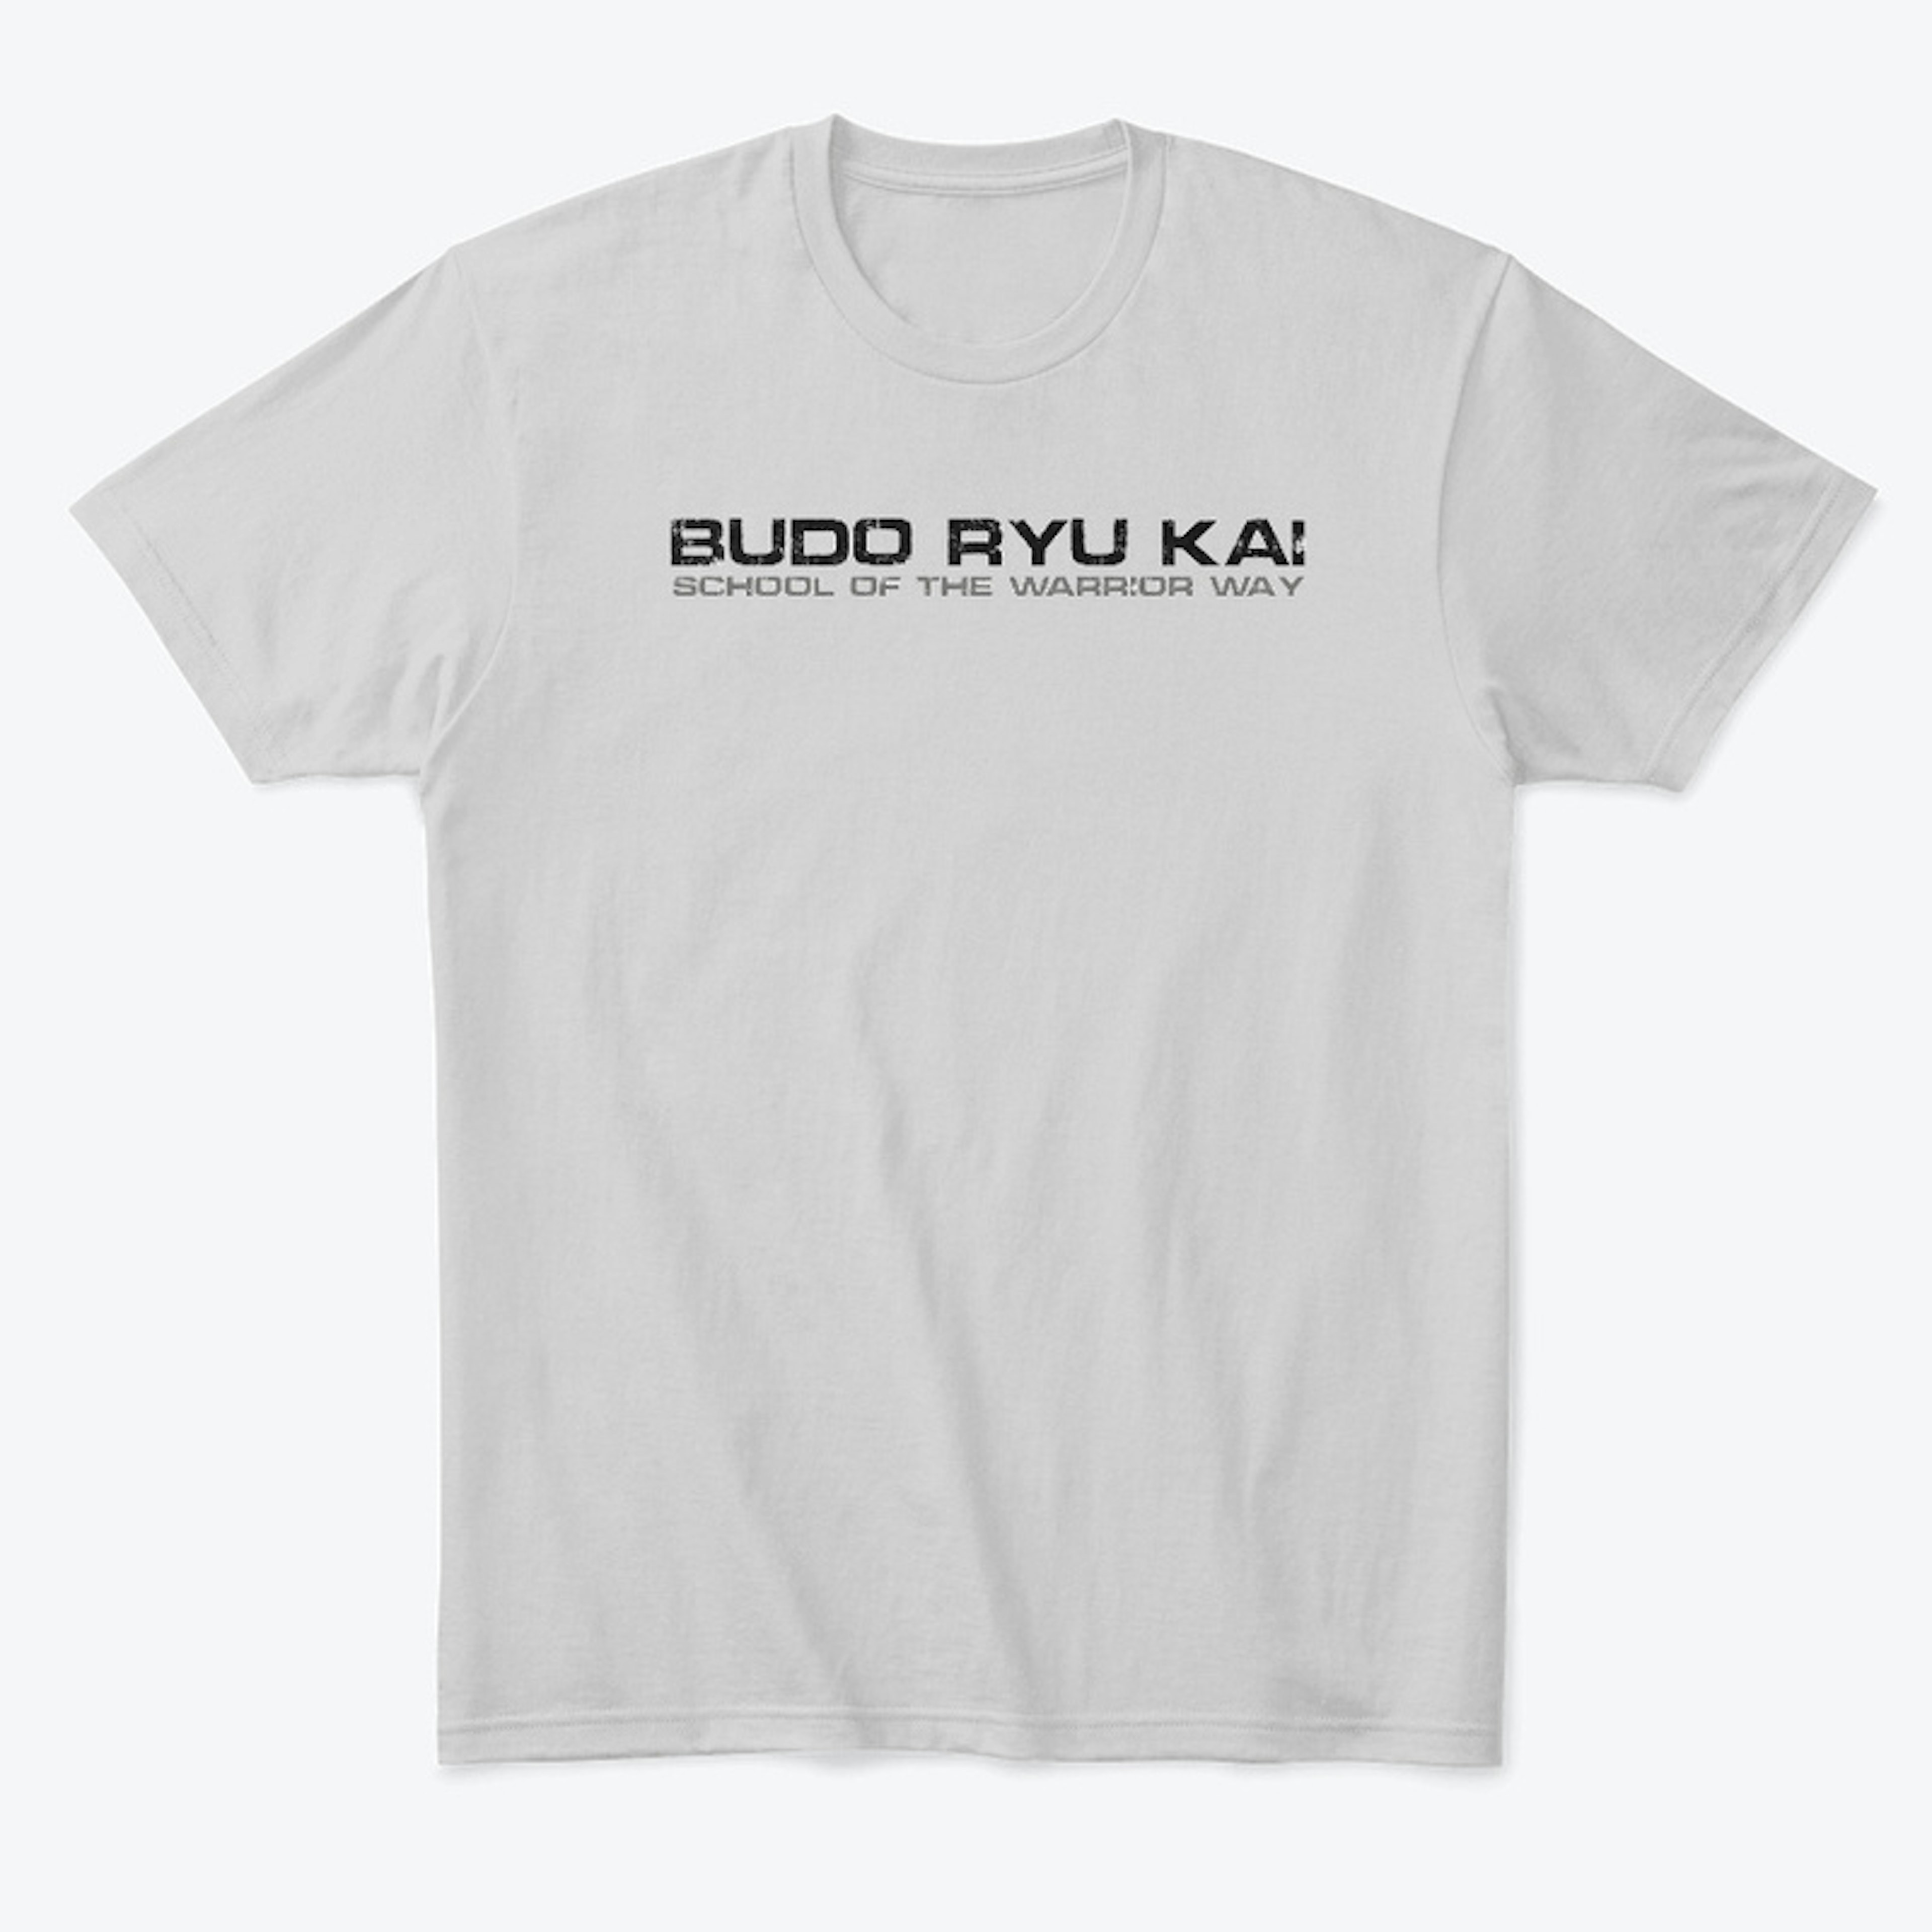 Budo Ryu Kai "Soldier" Men's Shirt